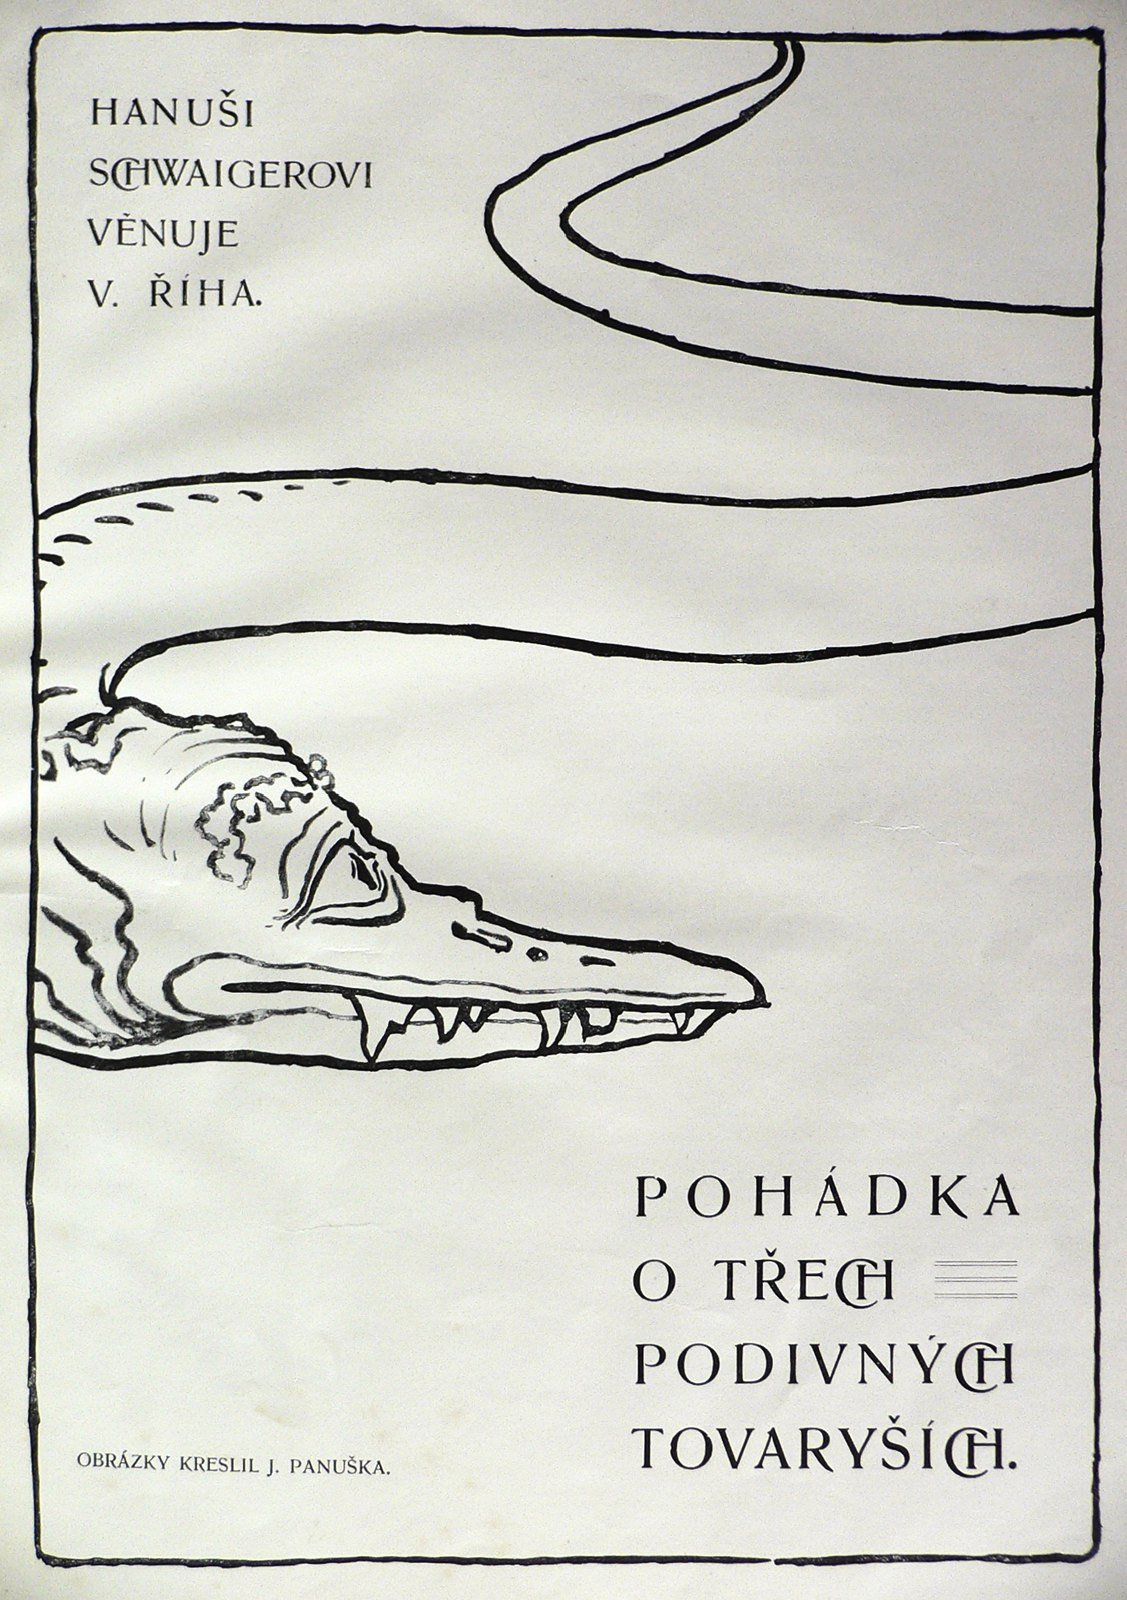 Jaroslav Panuska - Illustration (9) for Vaclav Riha's "Tale Of Three Wonderful Friends," 1900